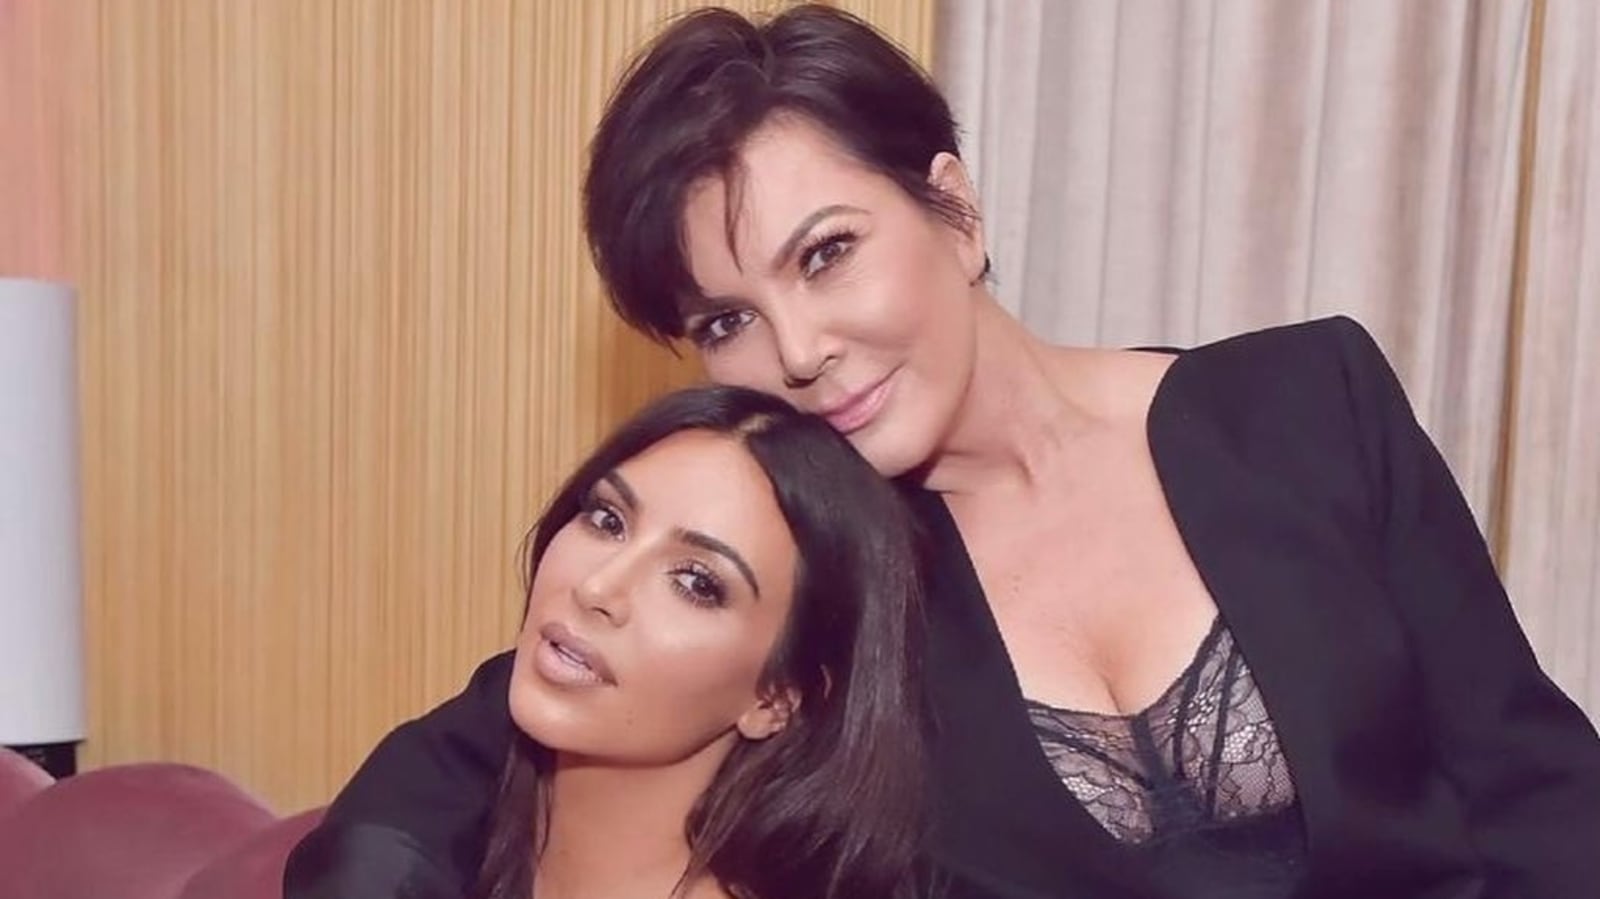 10 Mb Sex Video - Kris Jenner denies leaking daughter Kim Kardashian's sex tape in new video  - Hindustan Times